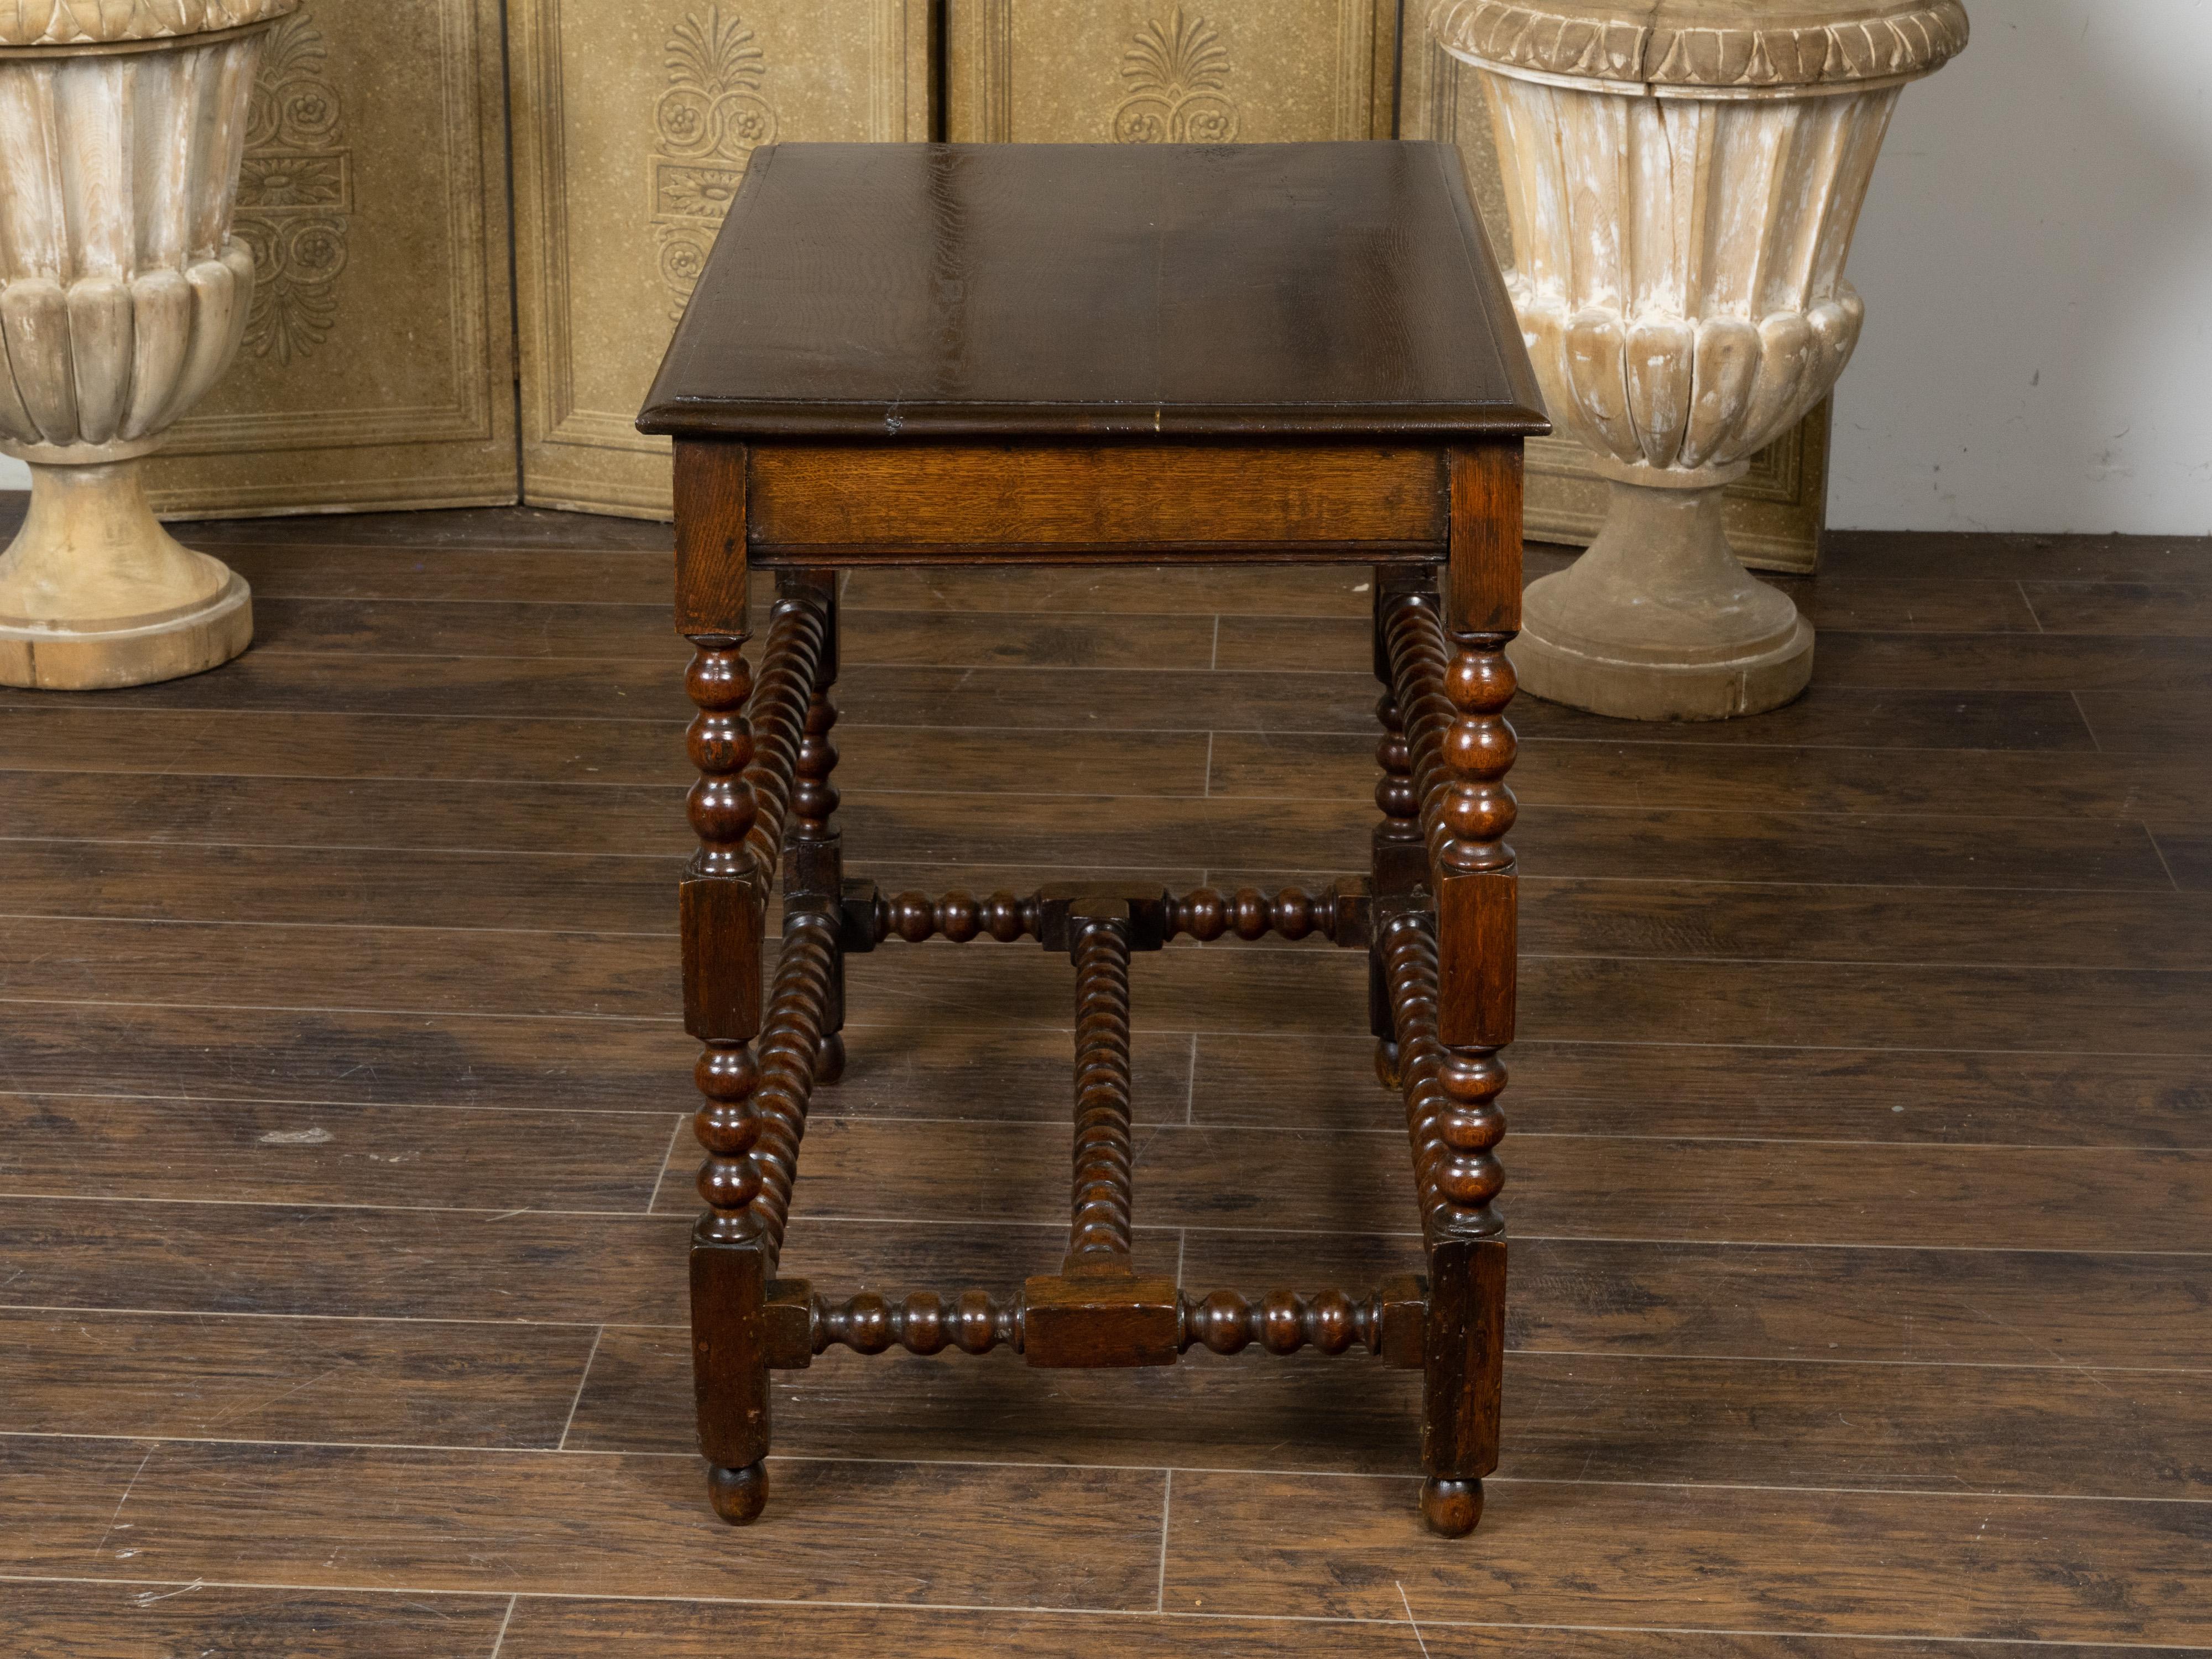 19th century antique furniture leg styles